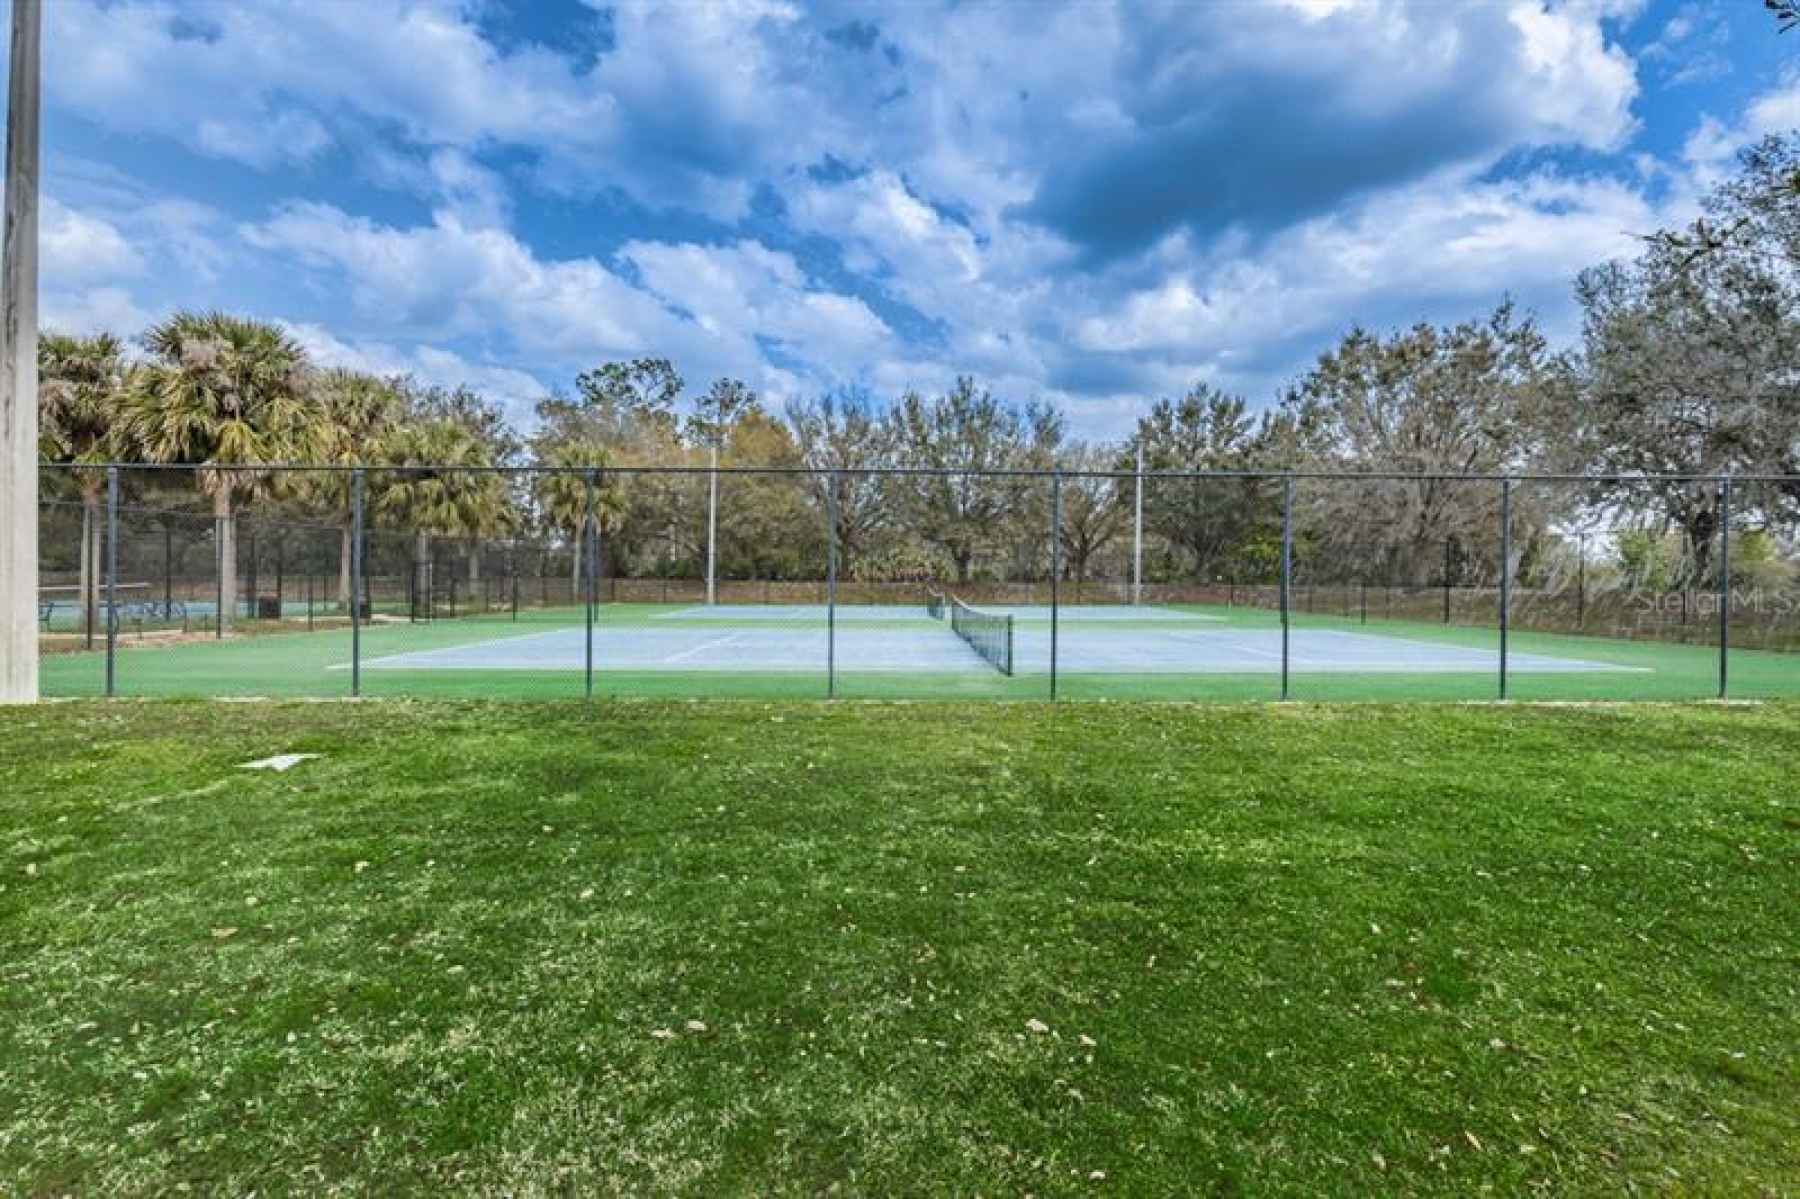 Fish Hawk Trails tennis courts